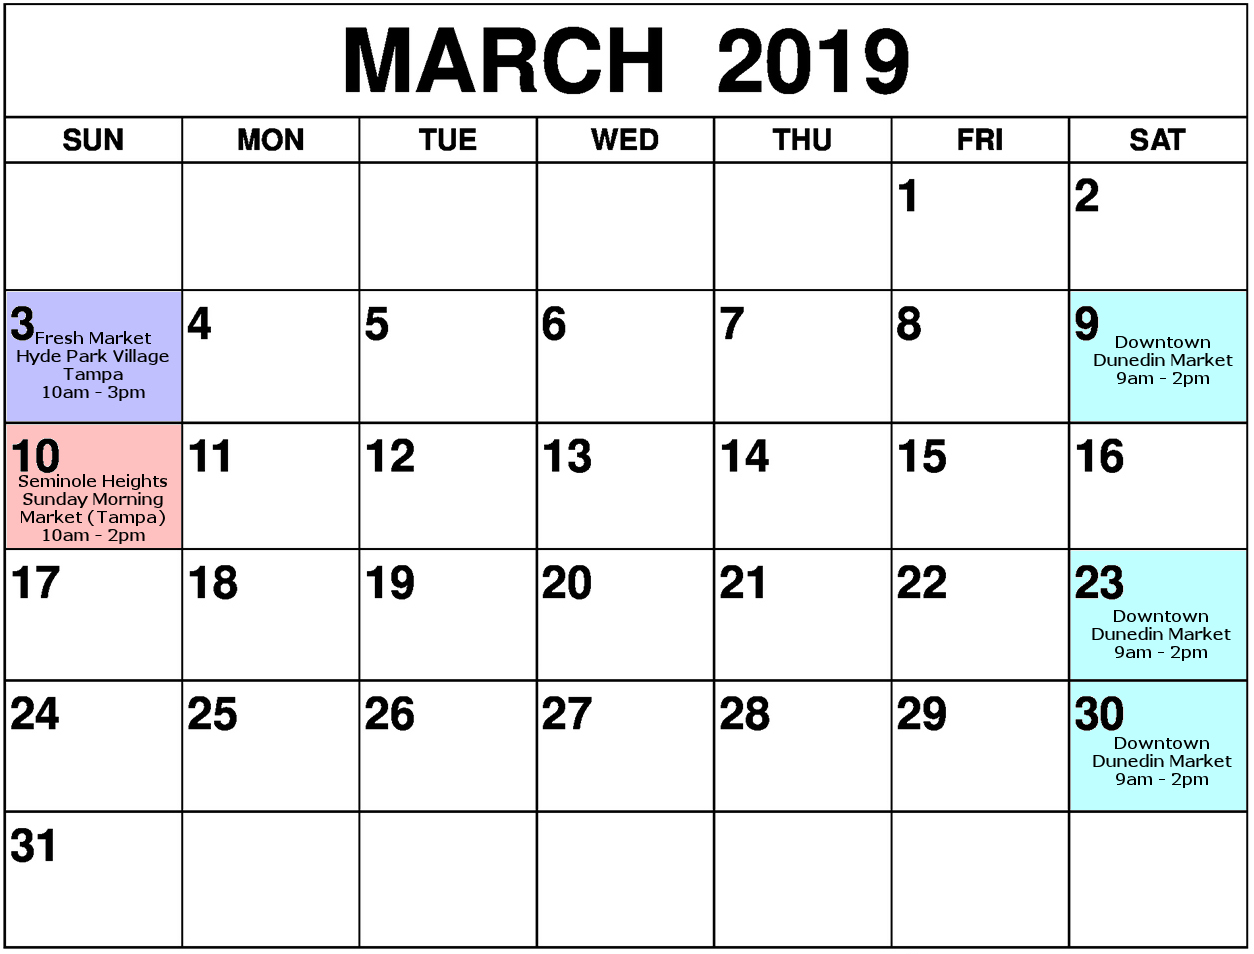 PhoenixFire Designs March 2019 in person event show Schedule